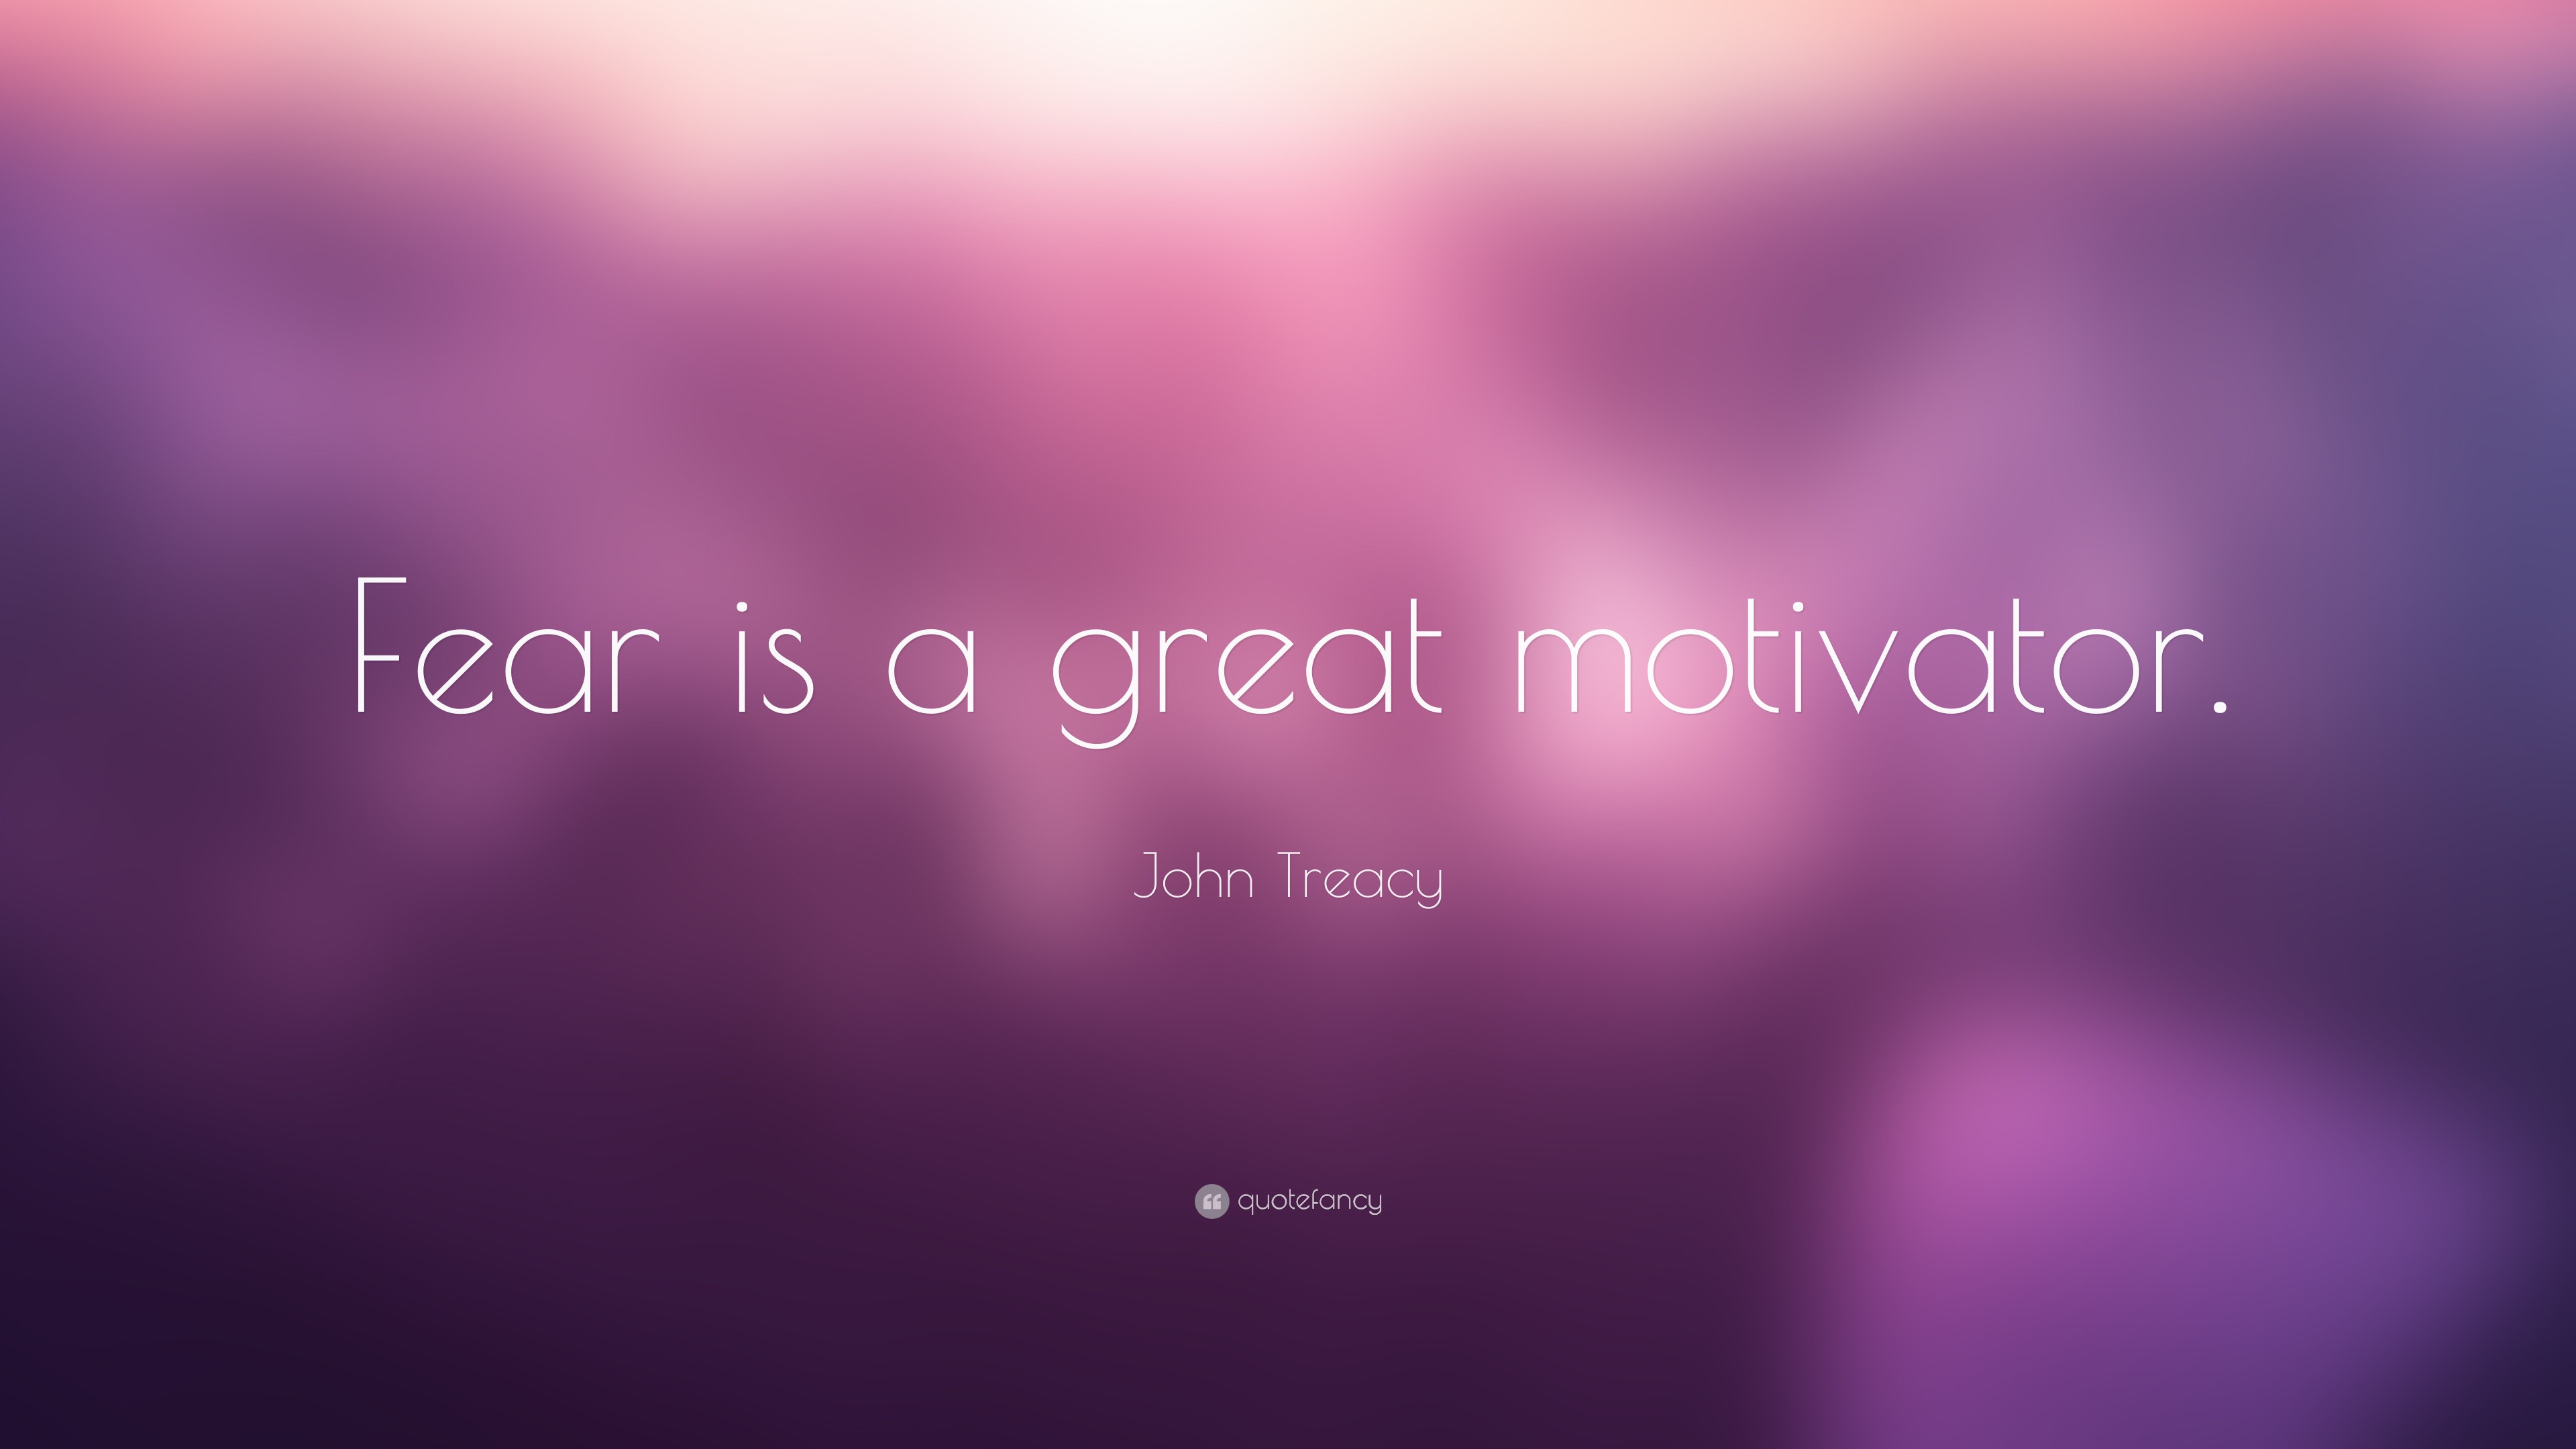 John Treacy Quote: “Fear is a great motivator.”